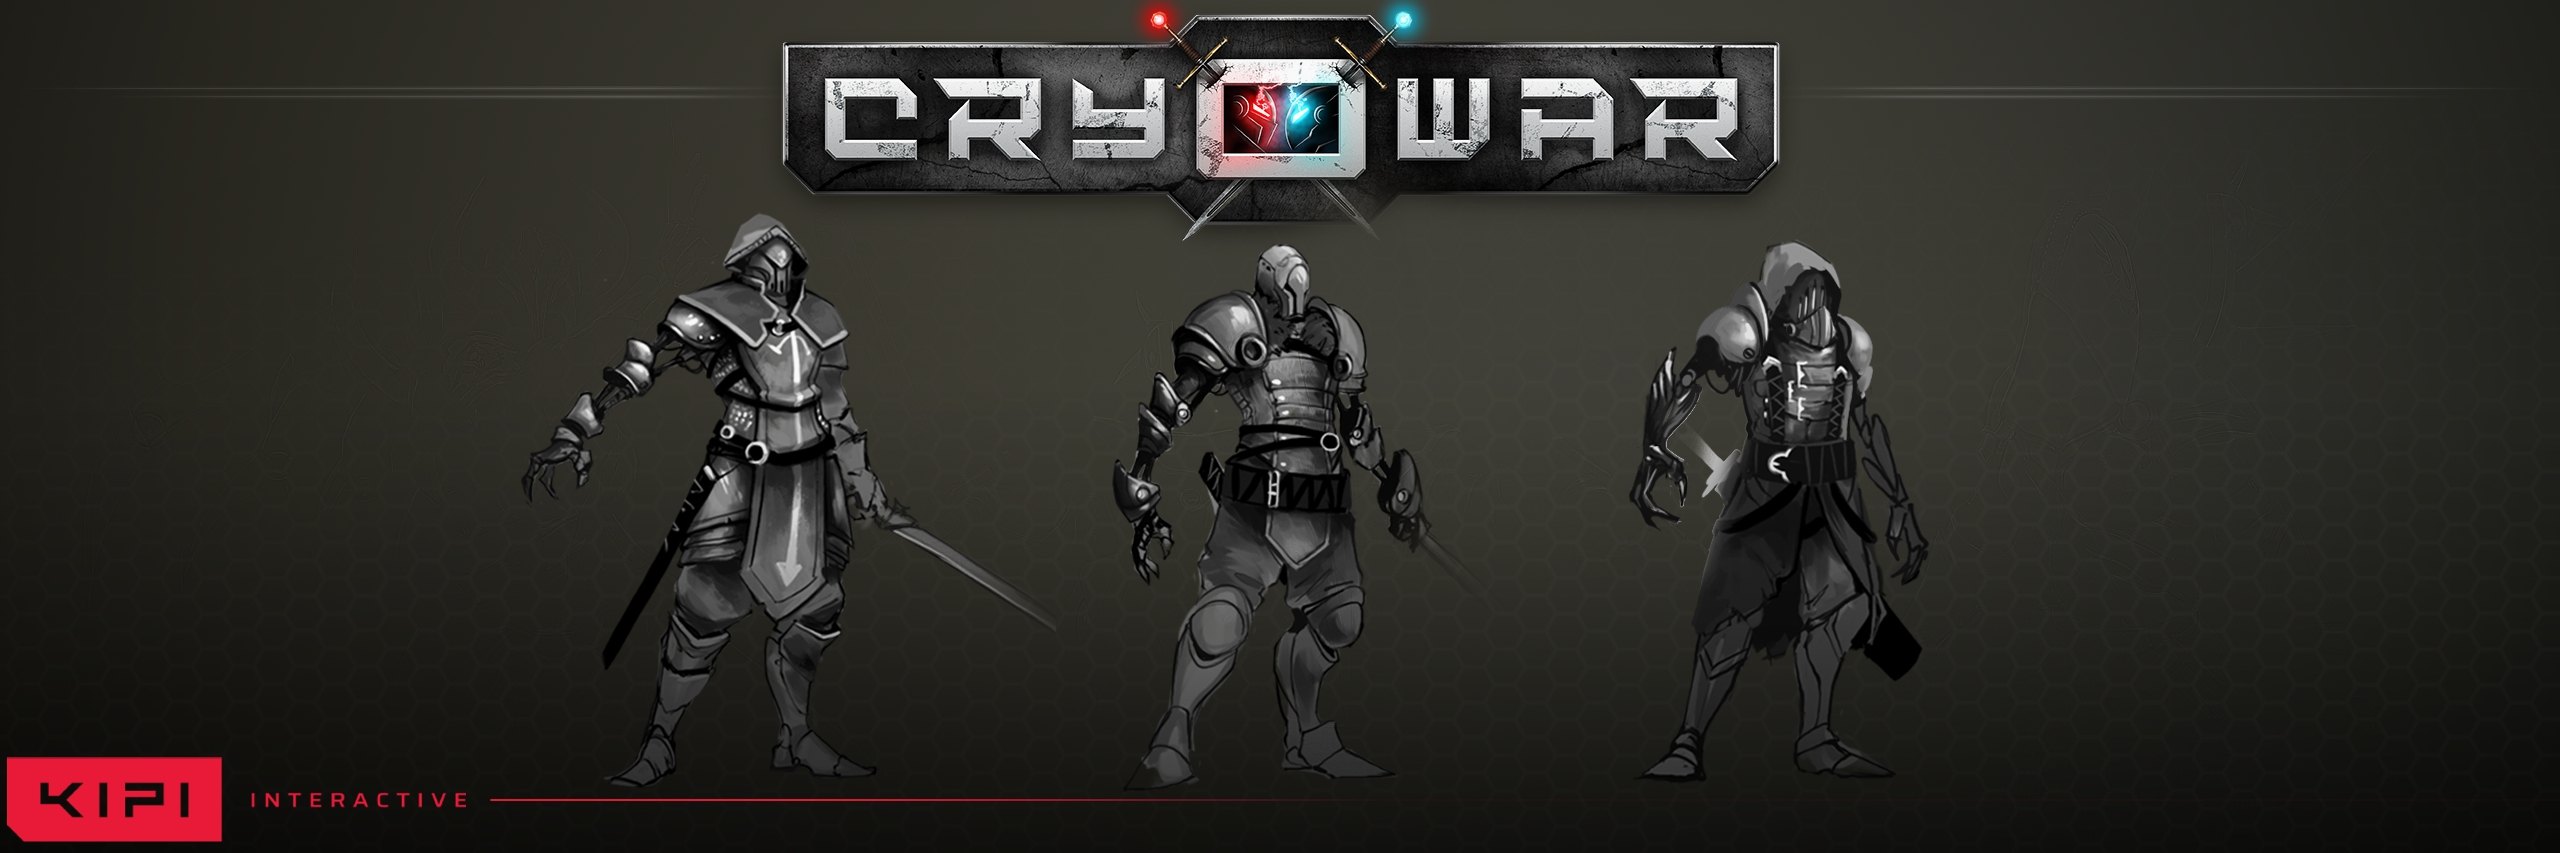 The Concept Art of Cryowar